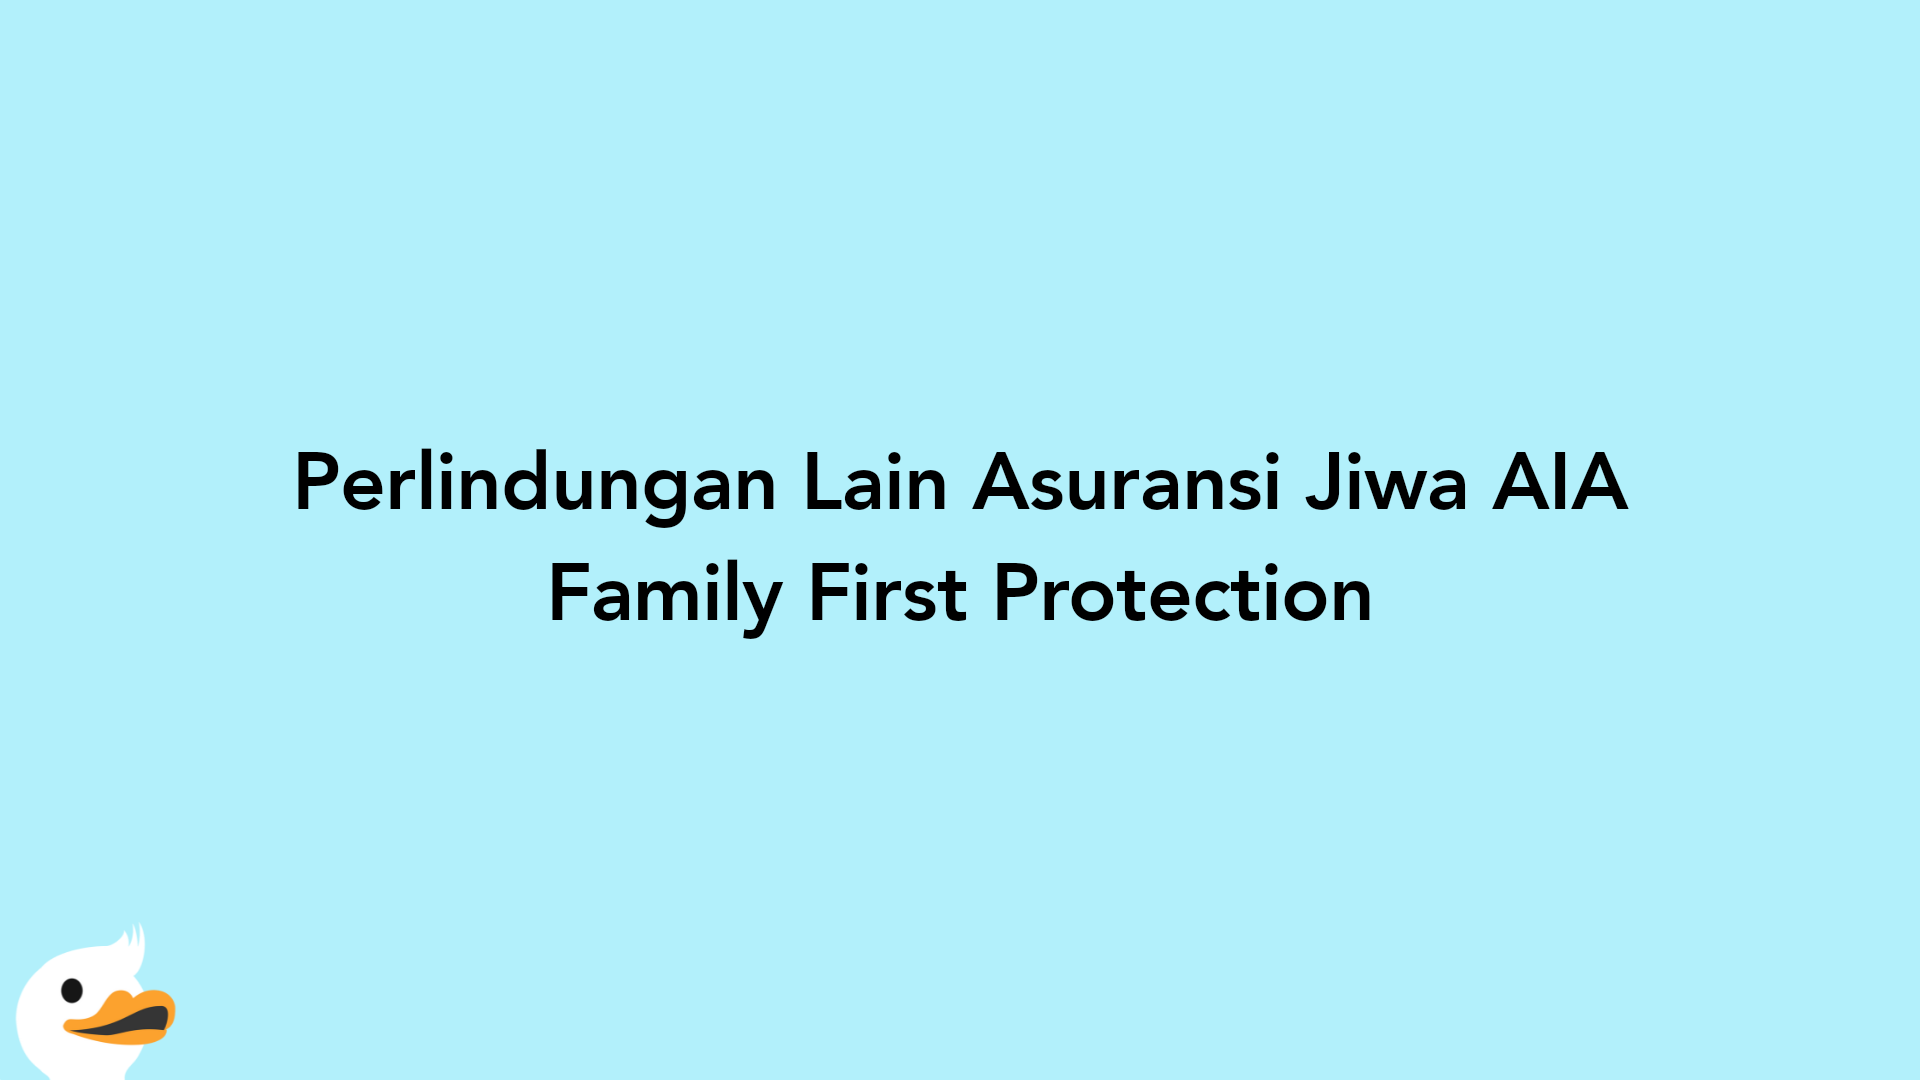 Perlindungan Lain Asuransi Jiwa AIA Family First Protection